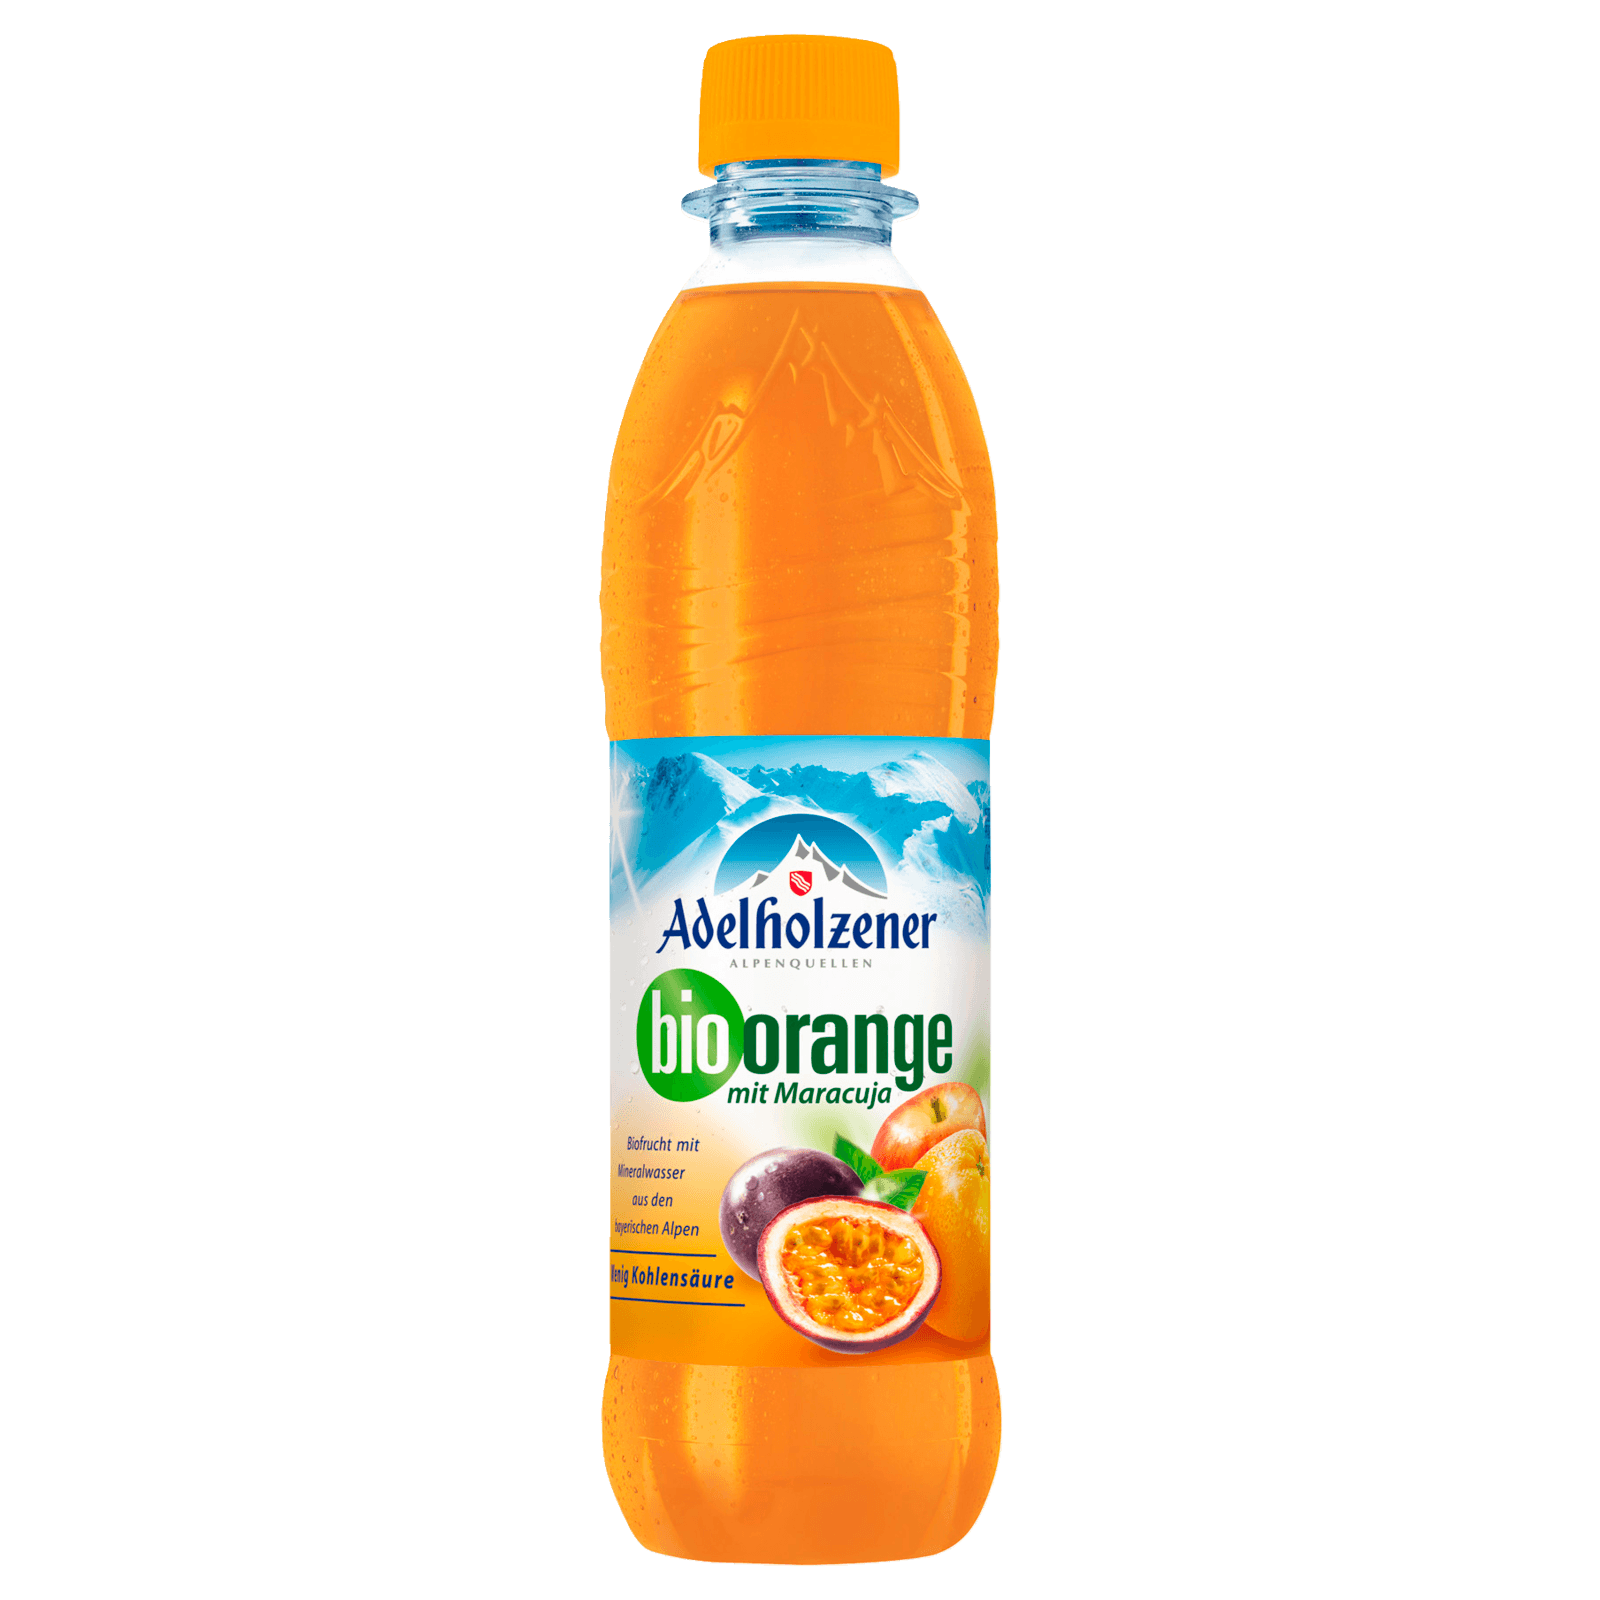 Adelholzener Bio Apfel Orange mit Maracuja 0,5l bei REWE online bestellen!